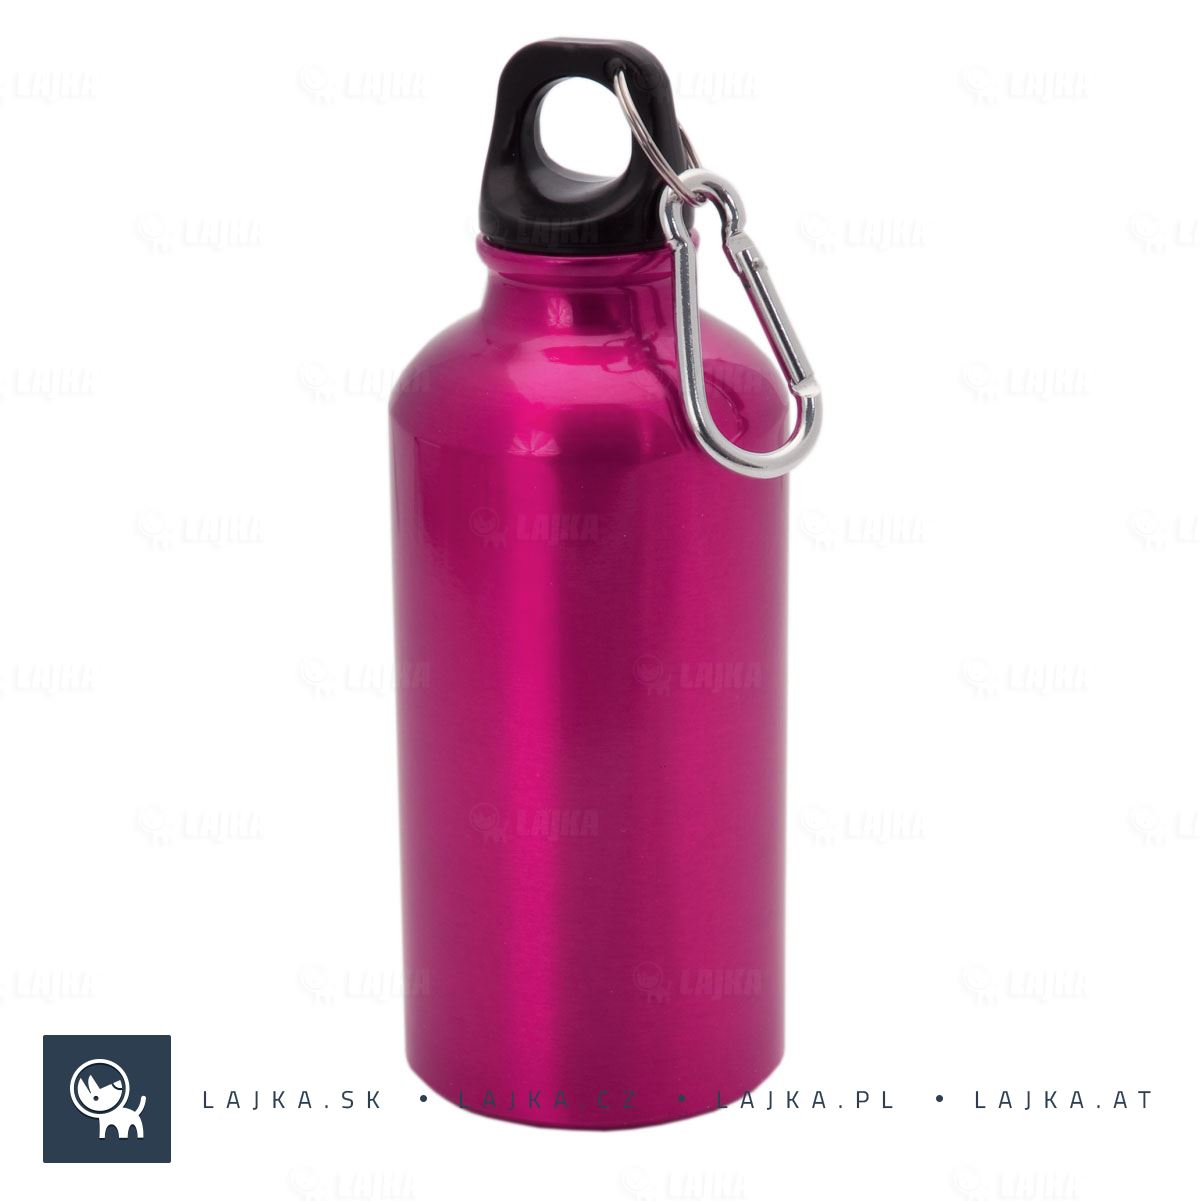 Športová fľaša na vodu 0,4l Mento, purpurová (1)